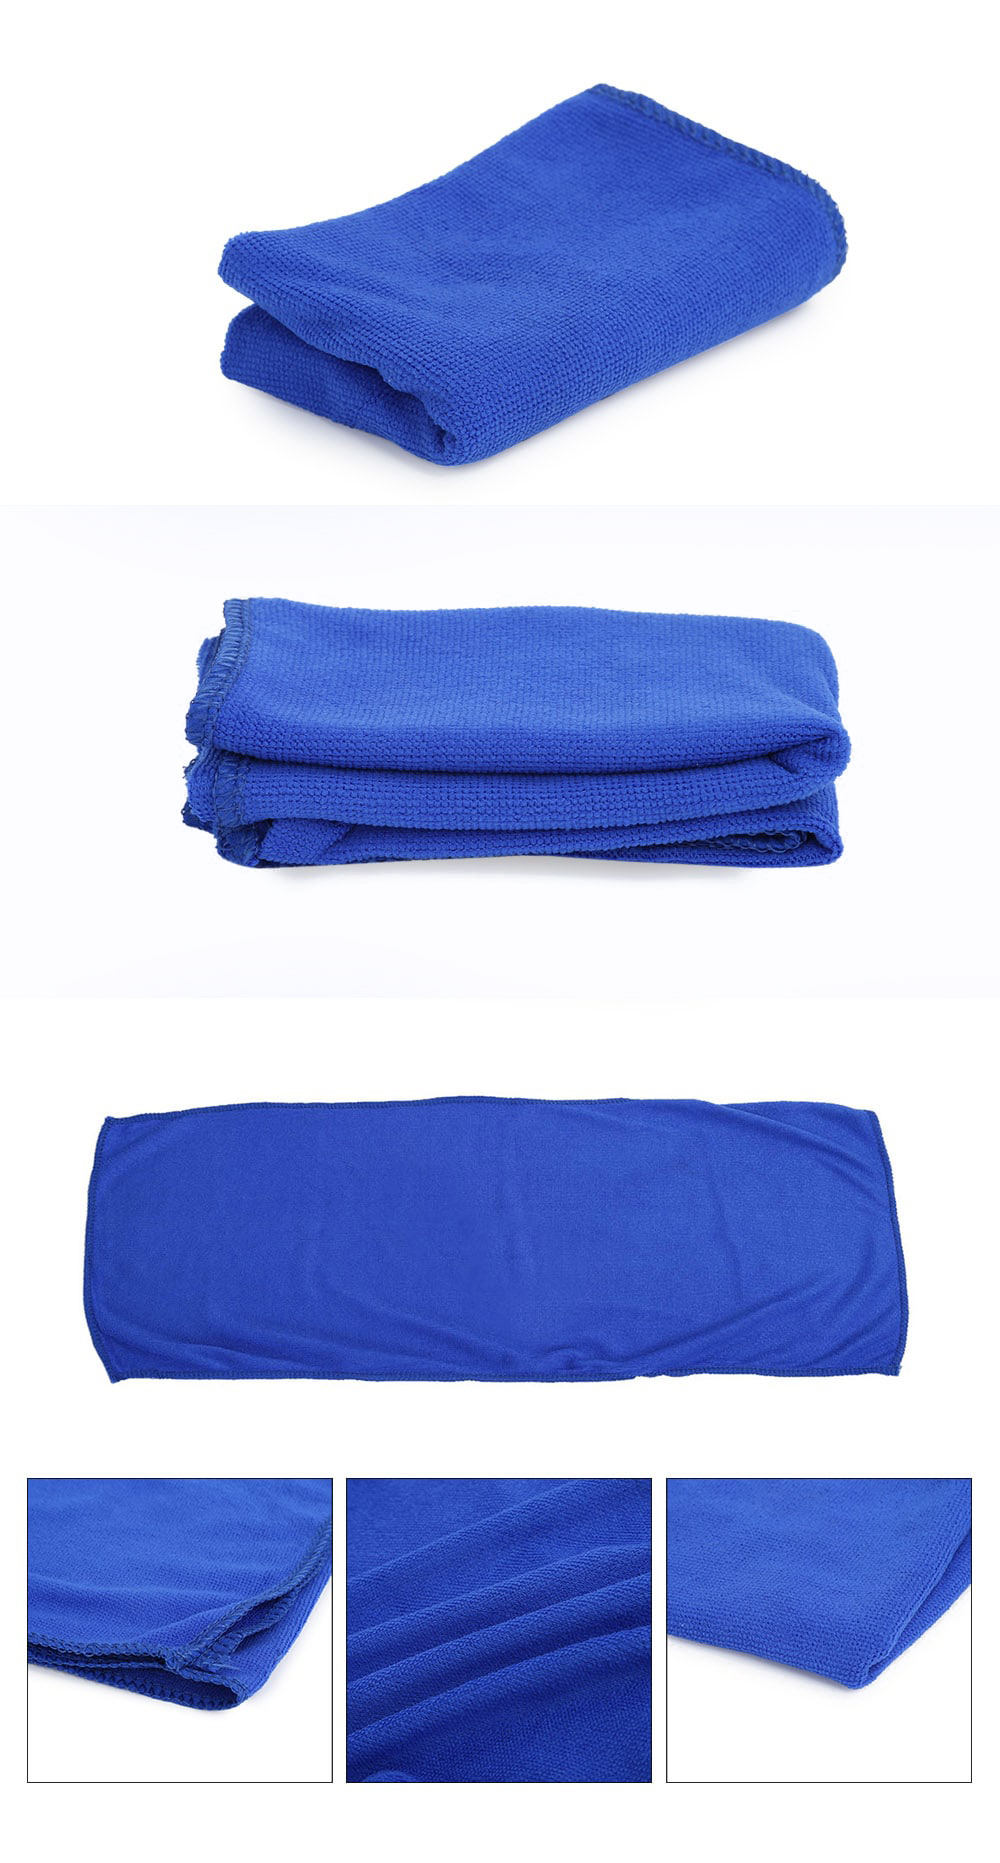 ZIQIAO 30 x 70cm Microfiber Wash Cloth Cleaning Towel